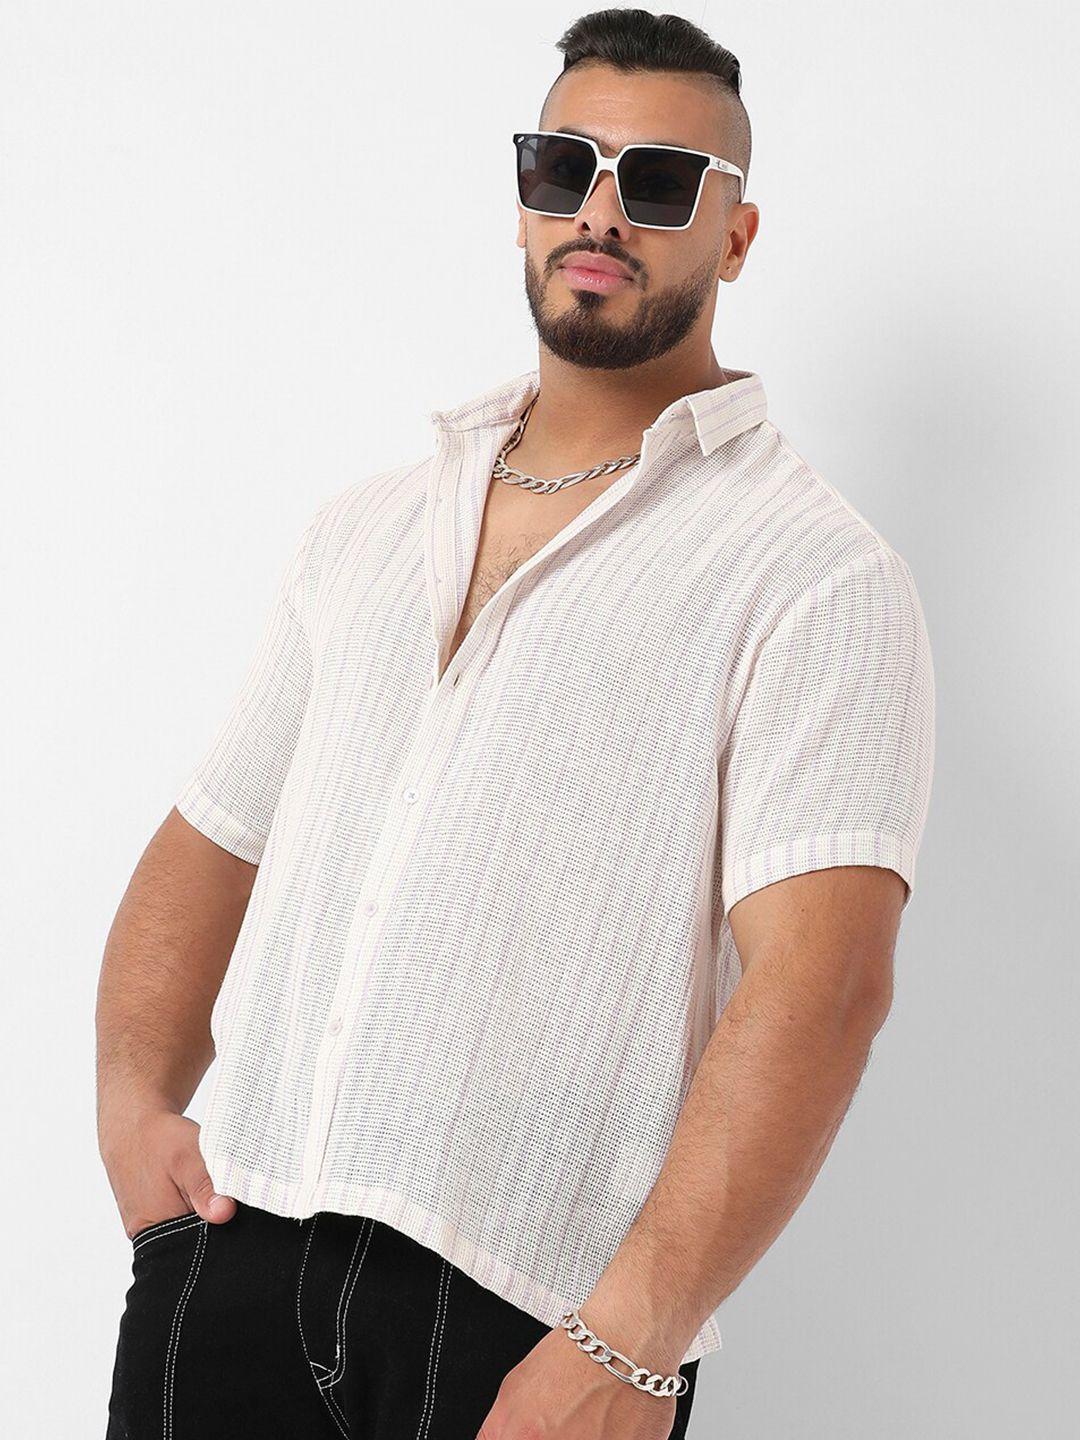 instafab plus classic vertical striped cotton casual shirt